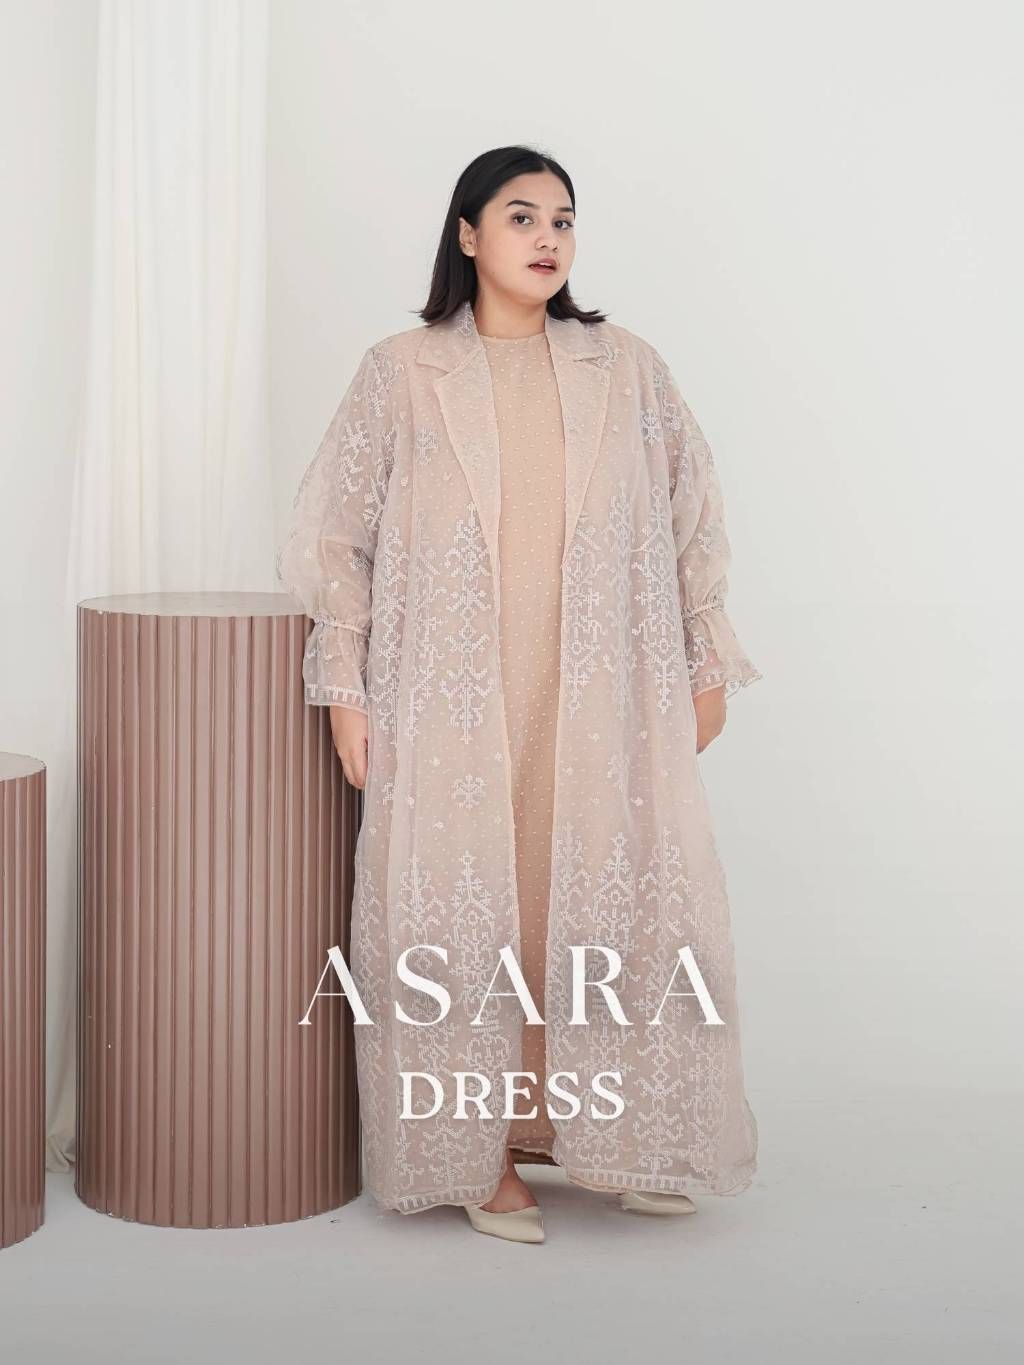 Rekomendasi baju lebaran warna pink satin - Xtramiles - Asara Dress.